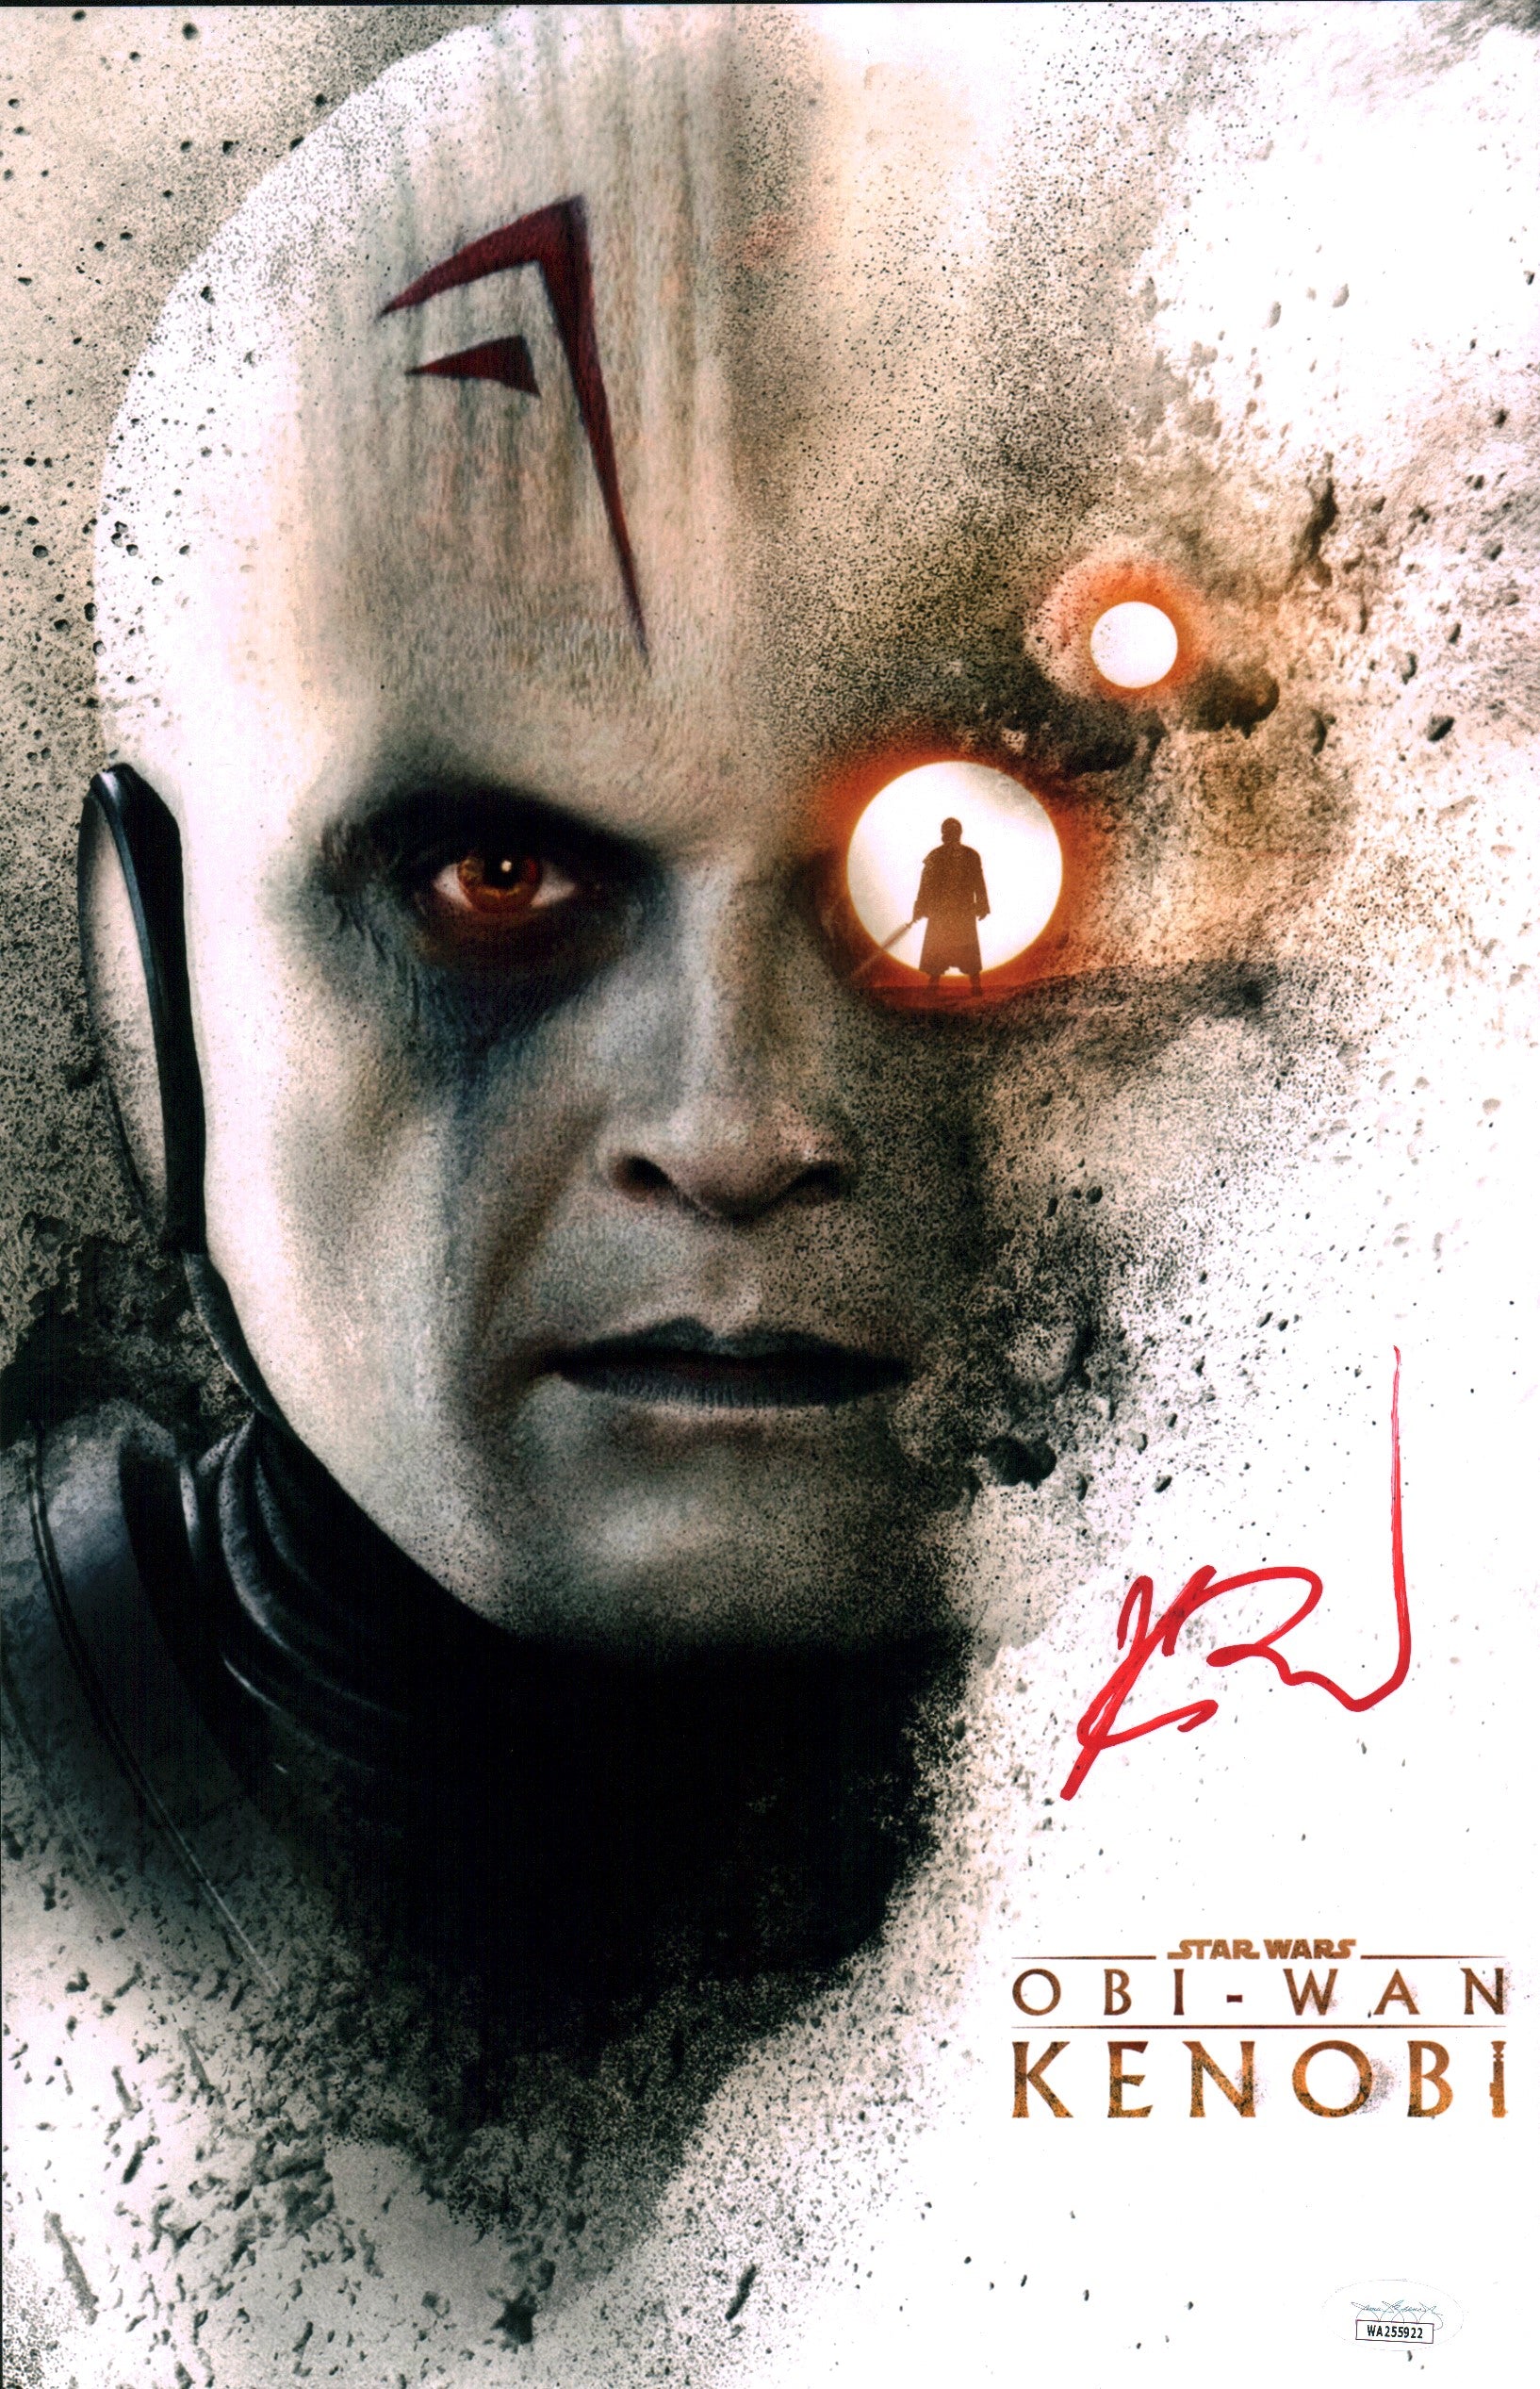 Rupert Friend Star Wars Obi-Wan Kenobi 11x17 Signed Photo Poster JSA COA Certified Autograph